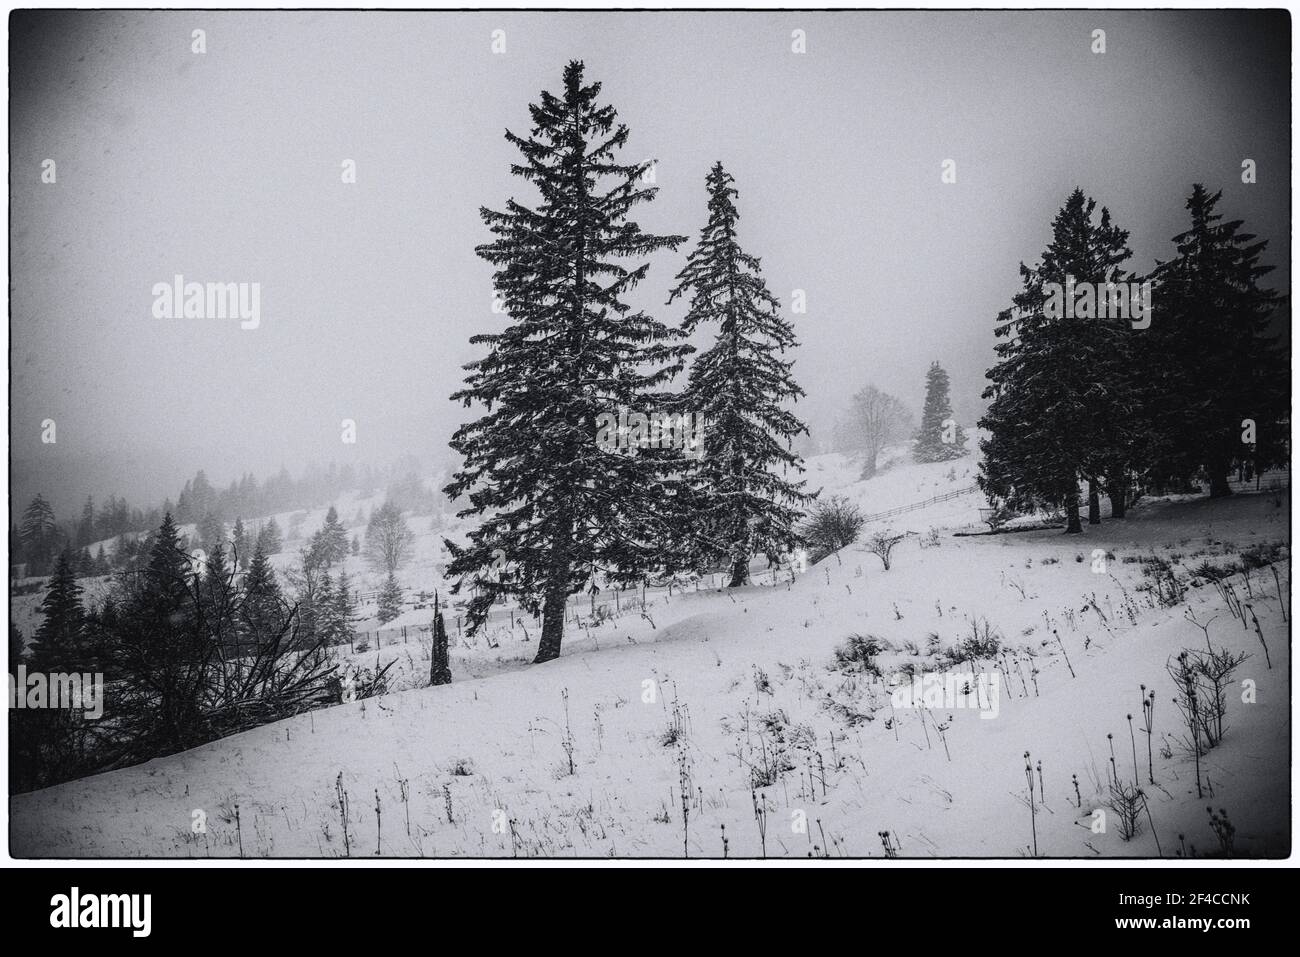 Frozen landscape ice snow Cut Out Stock Images & Pictures - Alamy